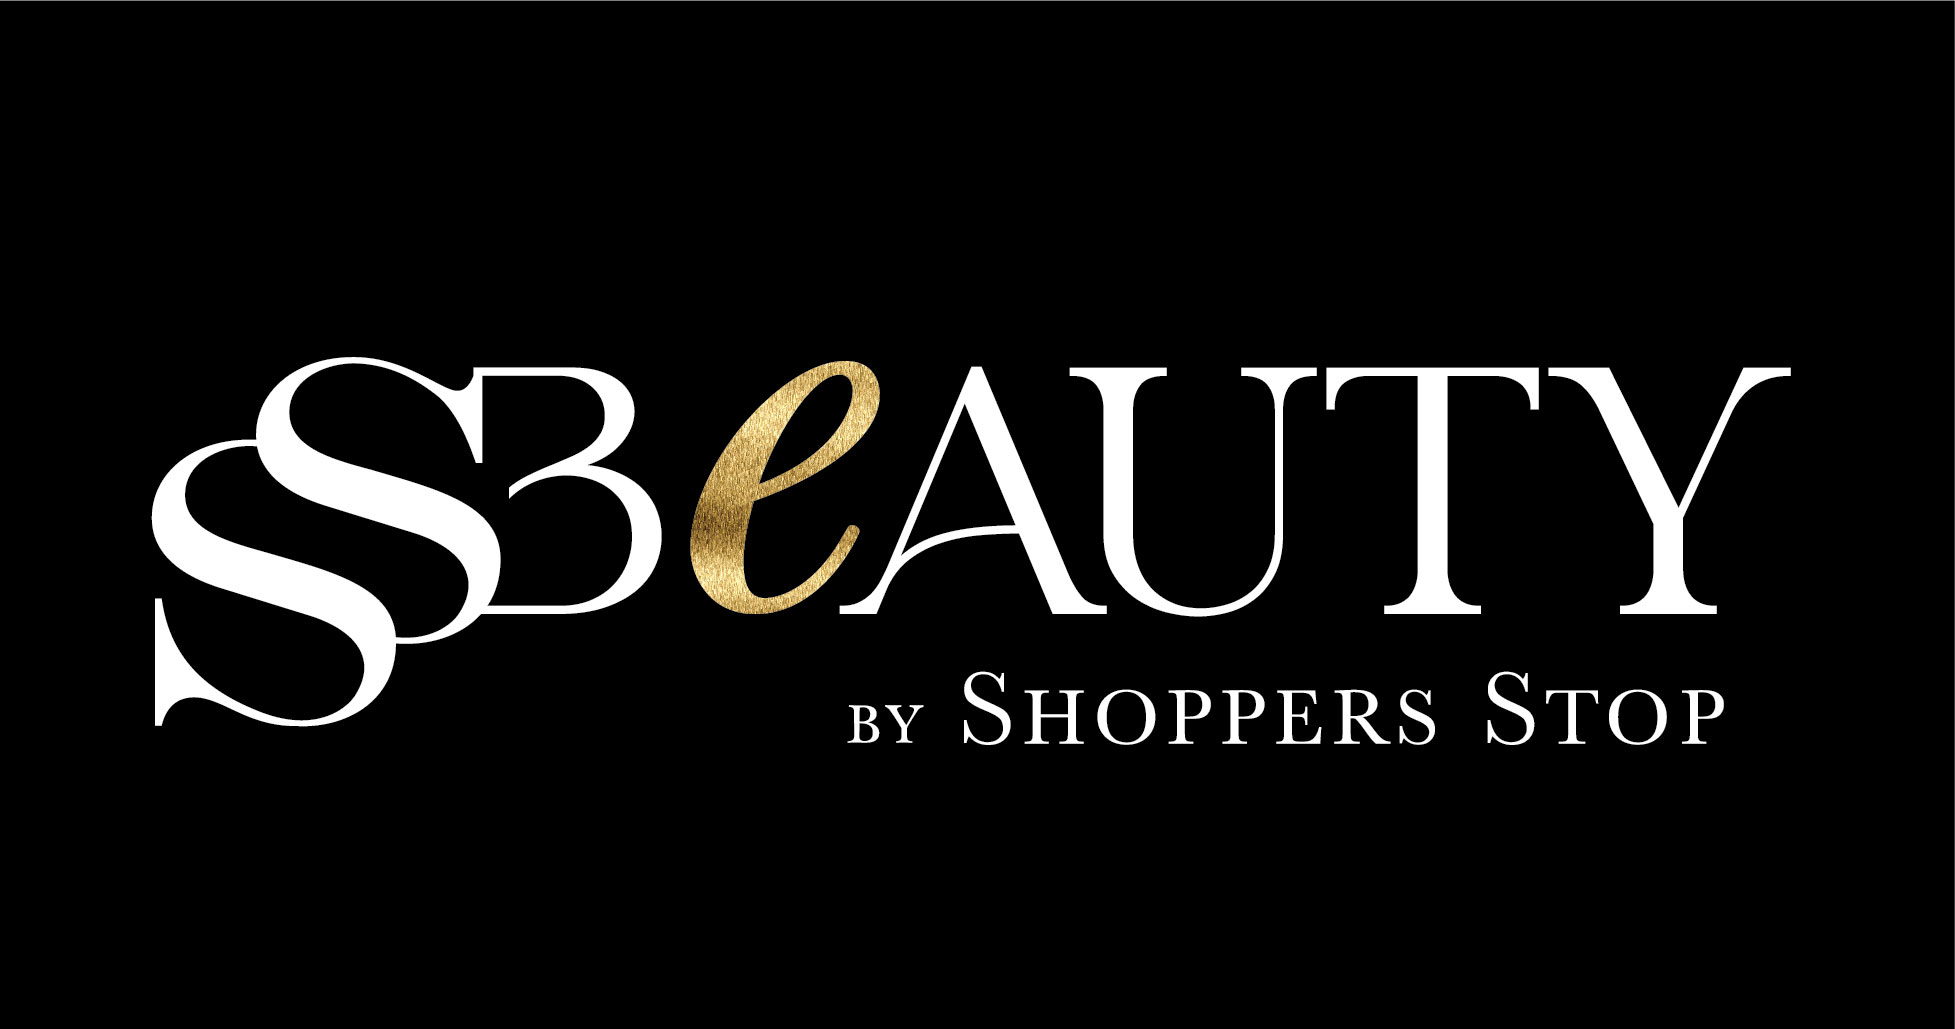 SS Beauty by Shopper Stop, Malad - Health, Beauty, Salon & Spa